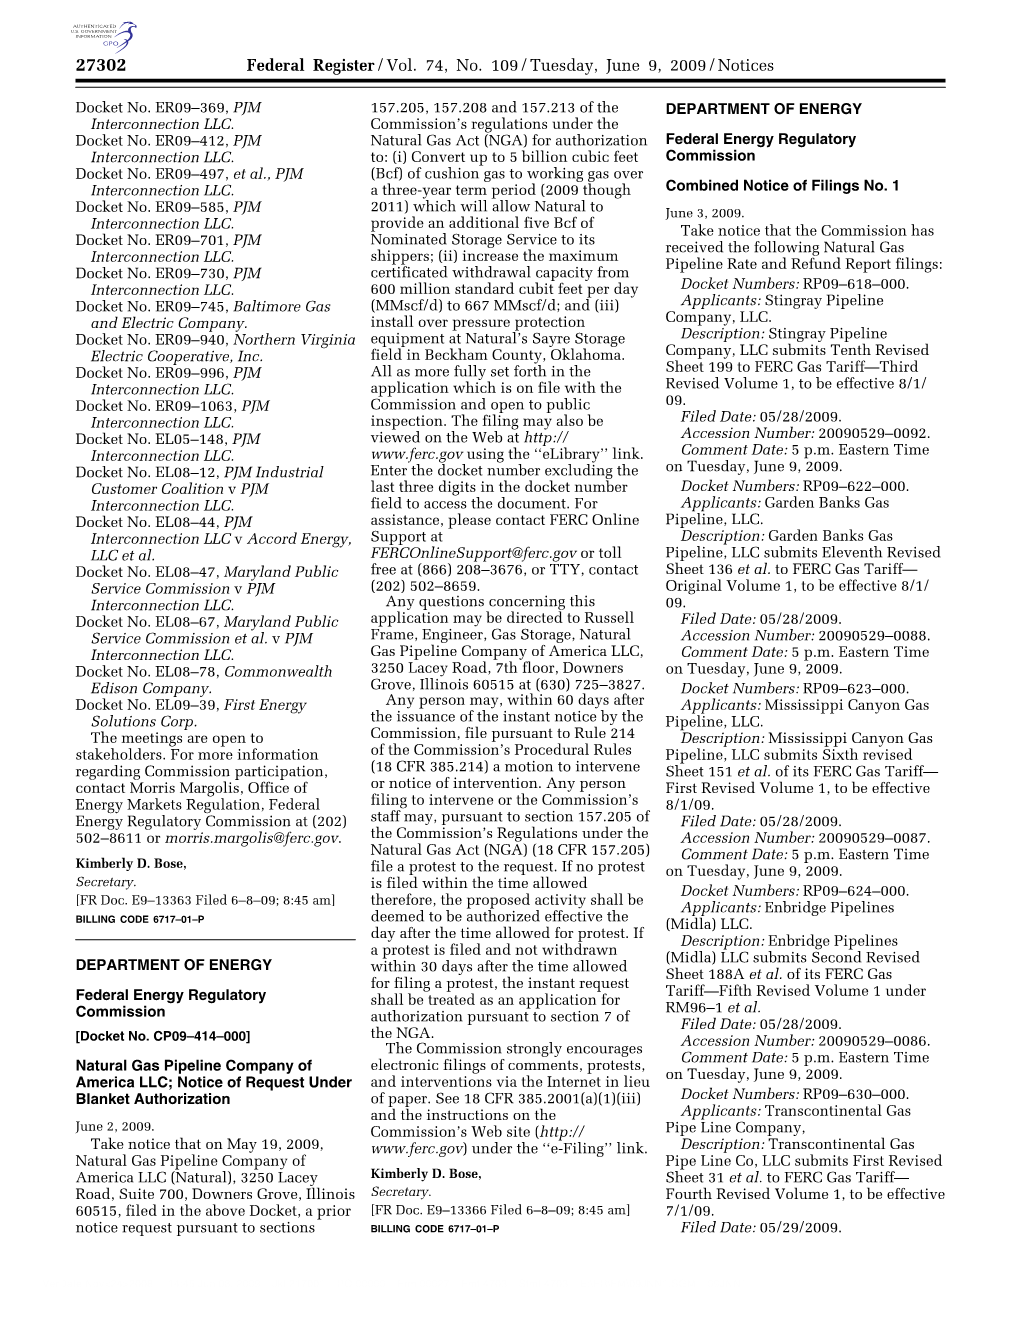 Federal Register/Vol. 74, No. 109/Tuesday, June 9, 2009/Notices